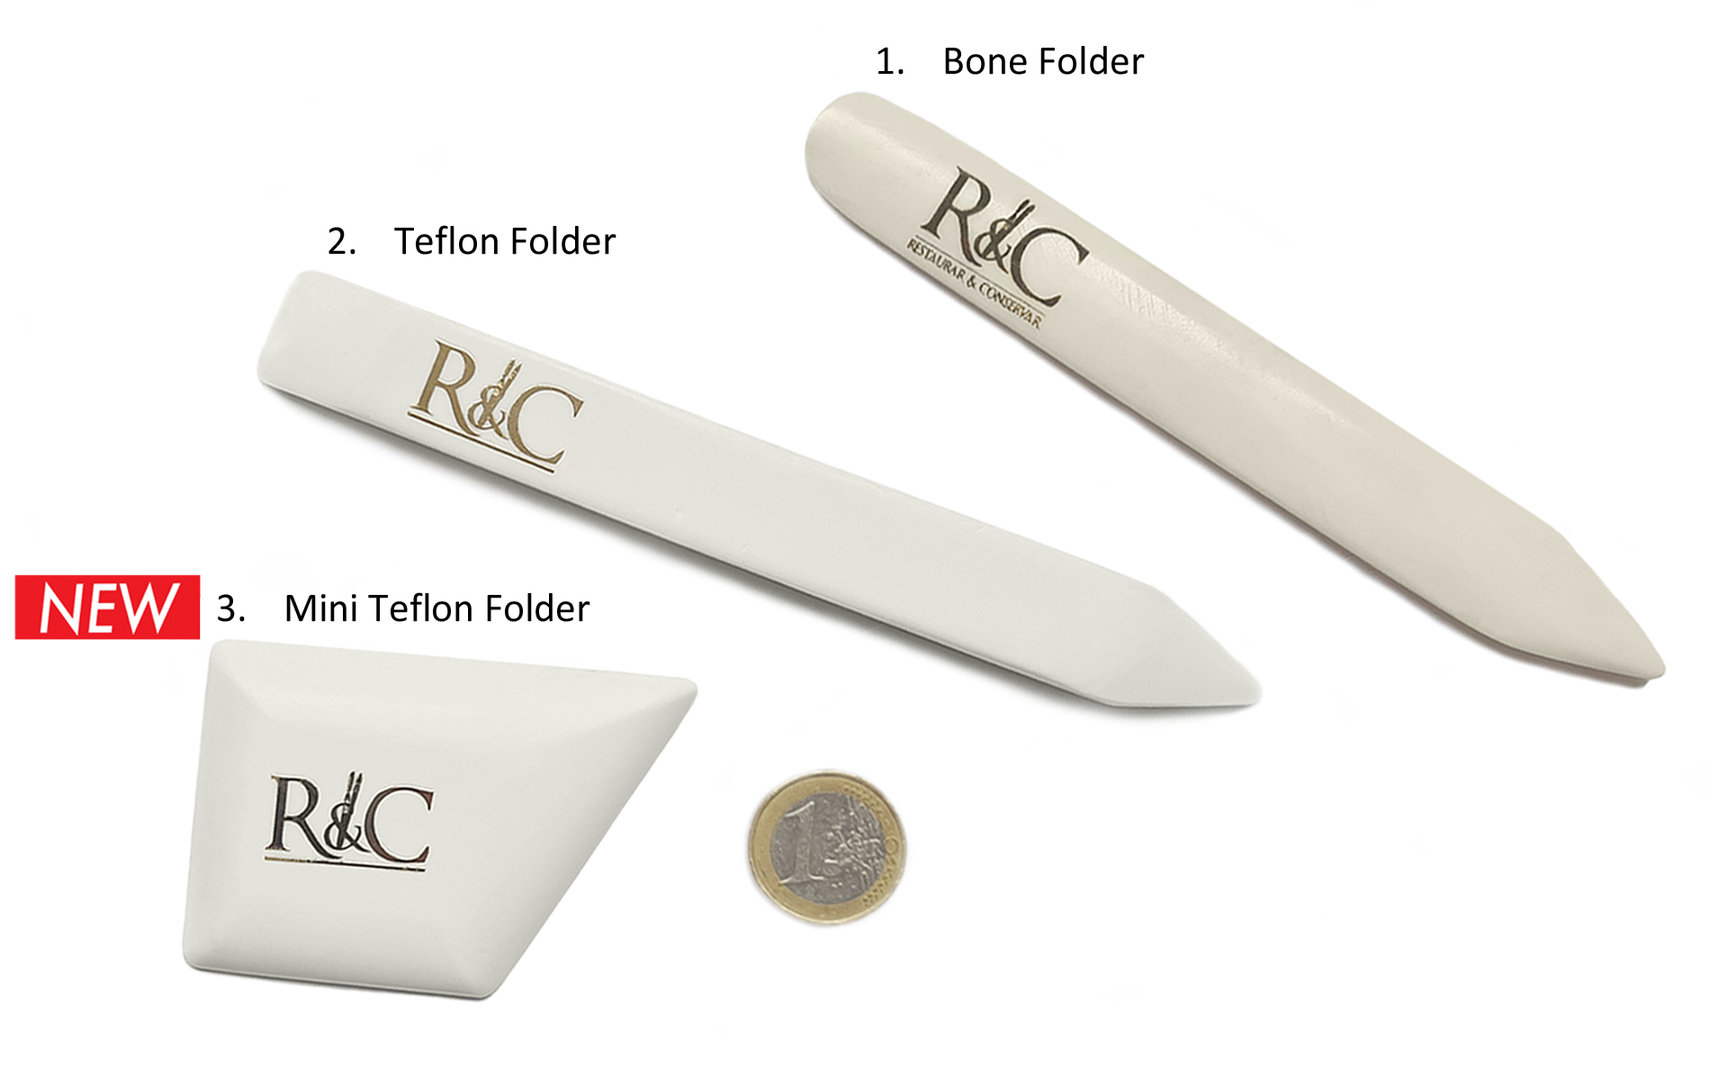 R&C Teflon and Bone Folder PROMO -30% - Your online store